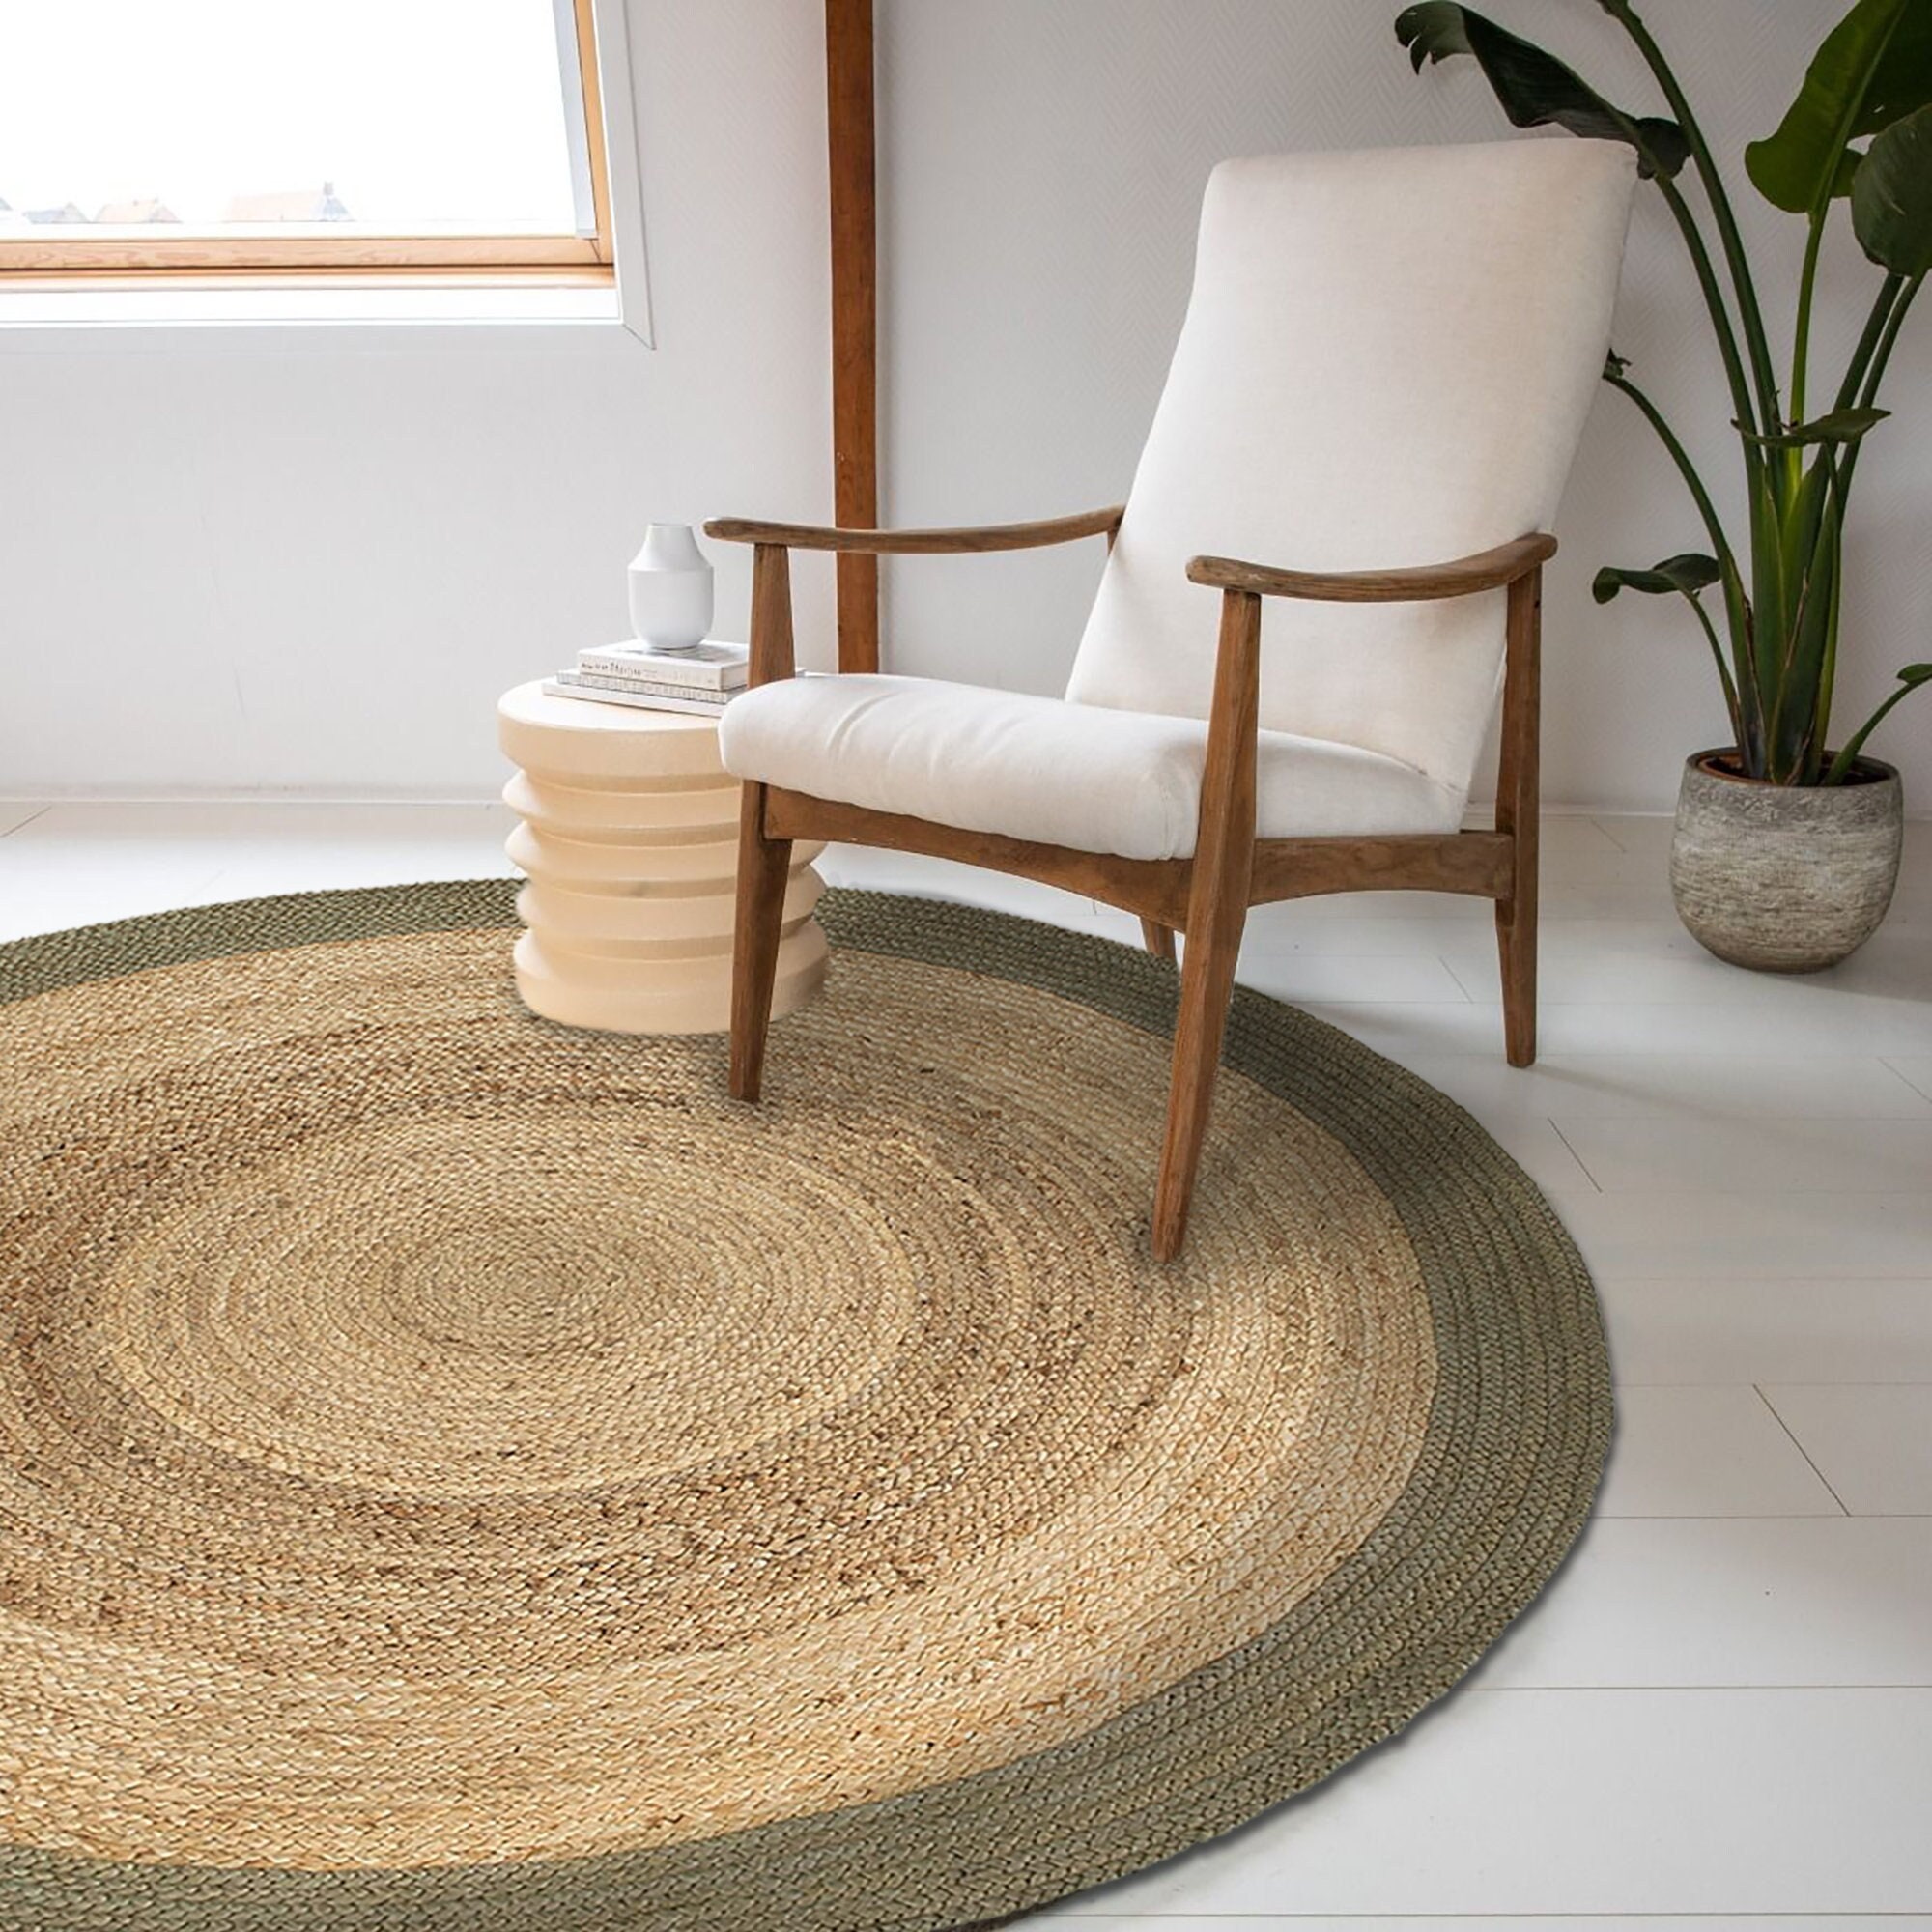 White and beige round floor carpet, premium braided jute mat